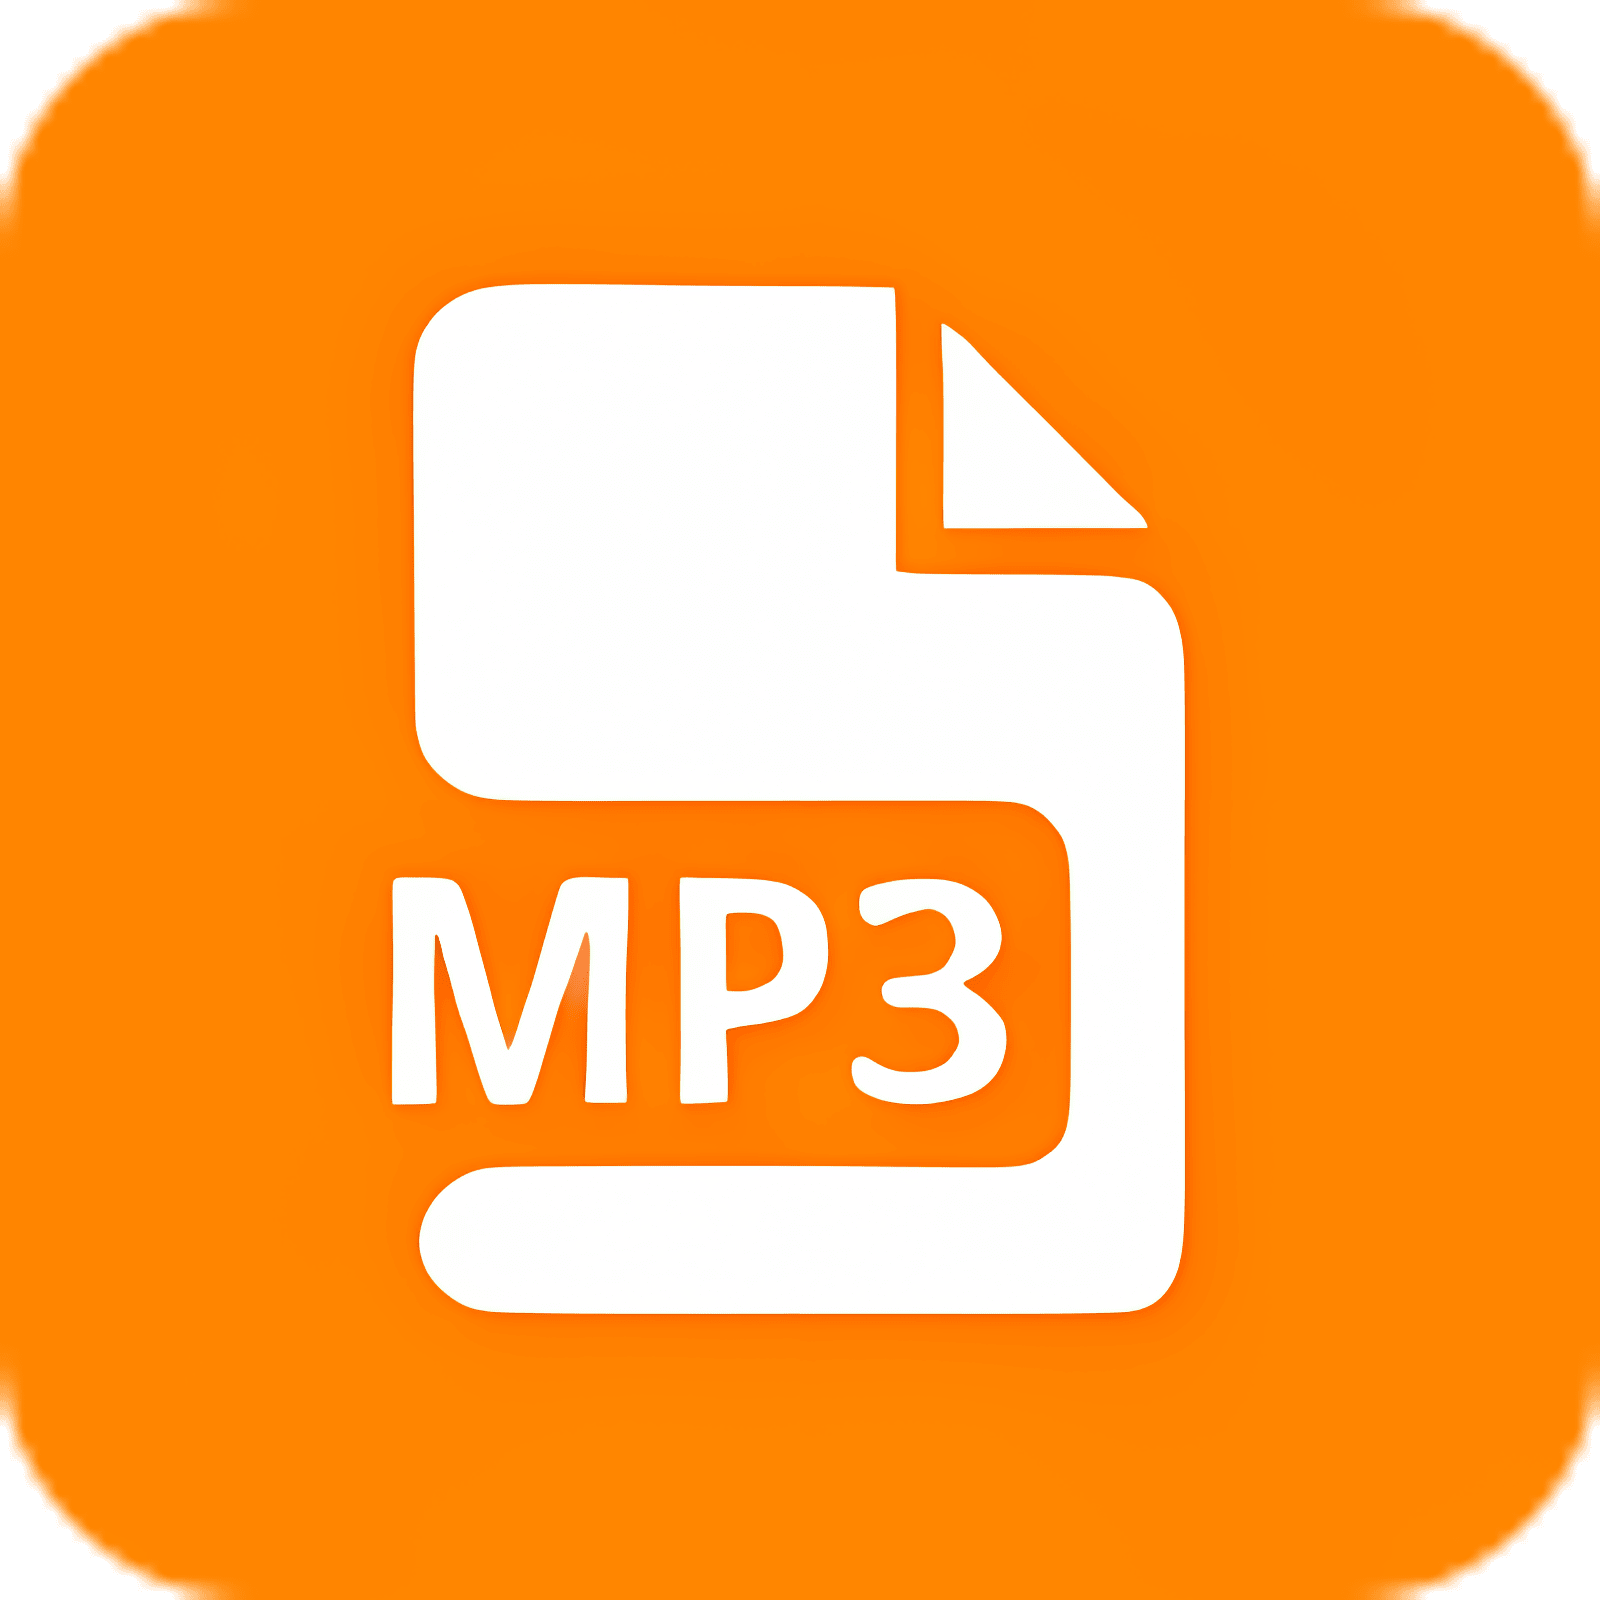 freeware mp3 audio editor